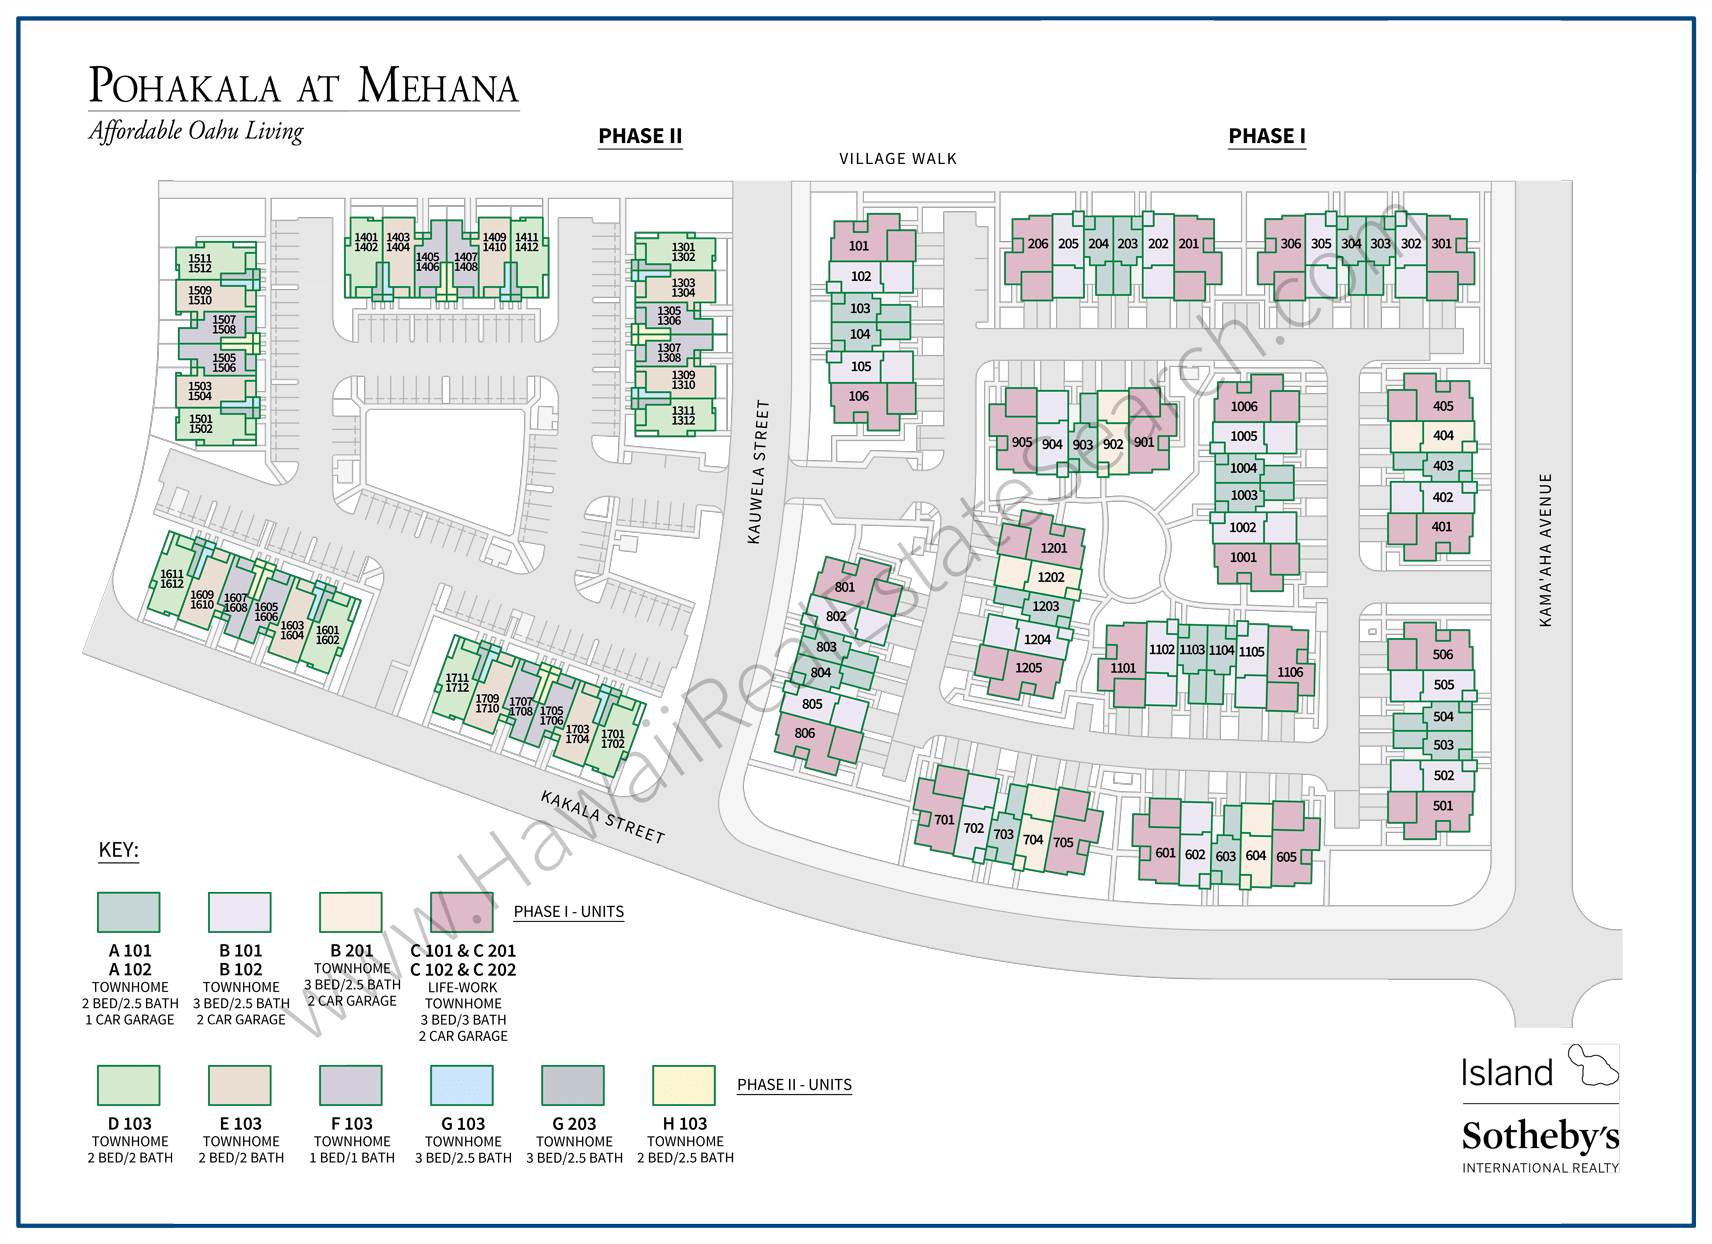 Pohakala at Mehana Site Plan Map